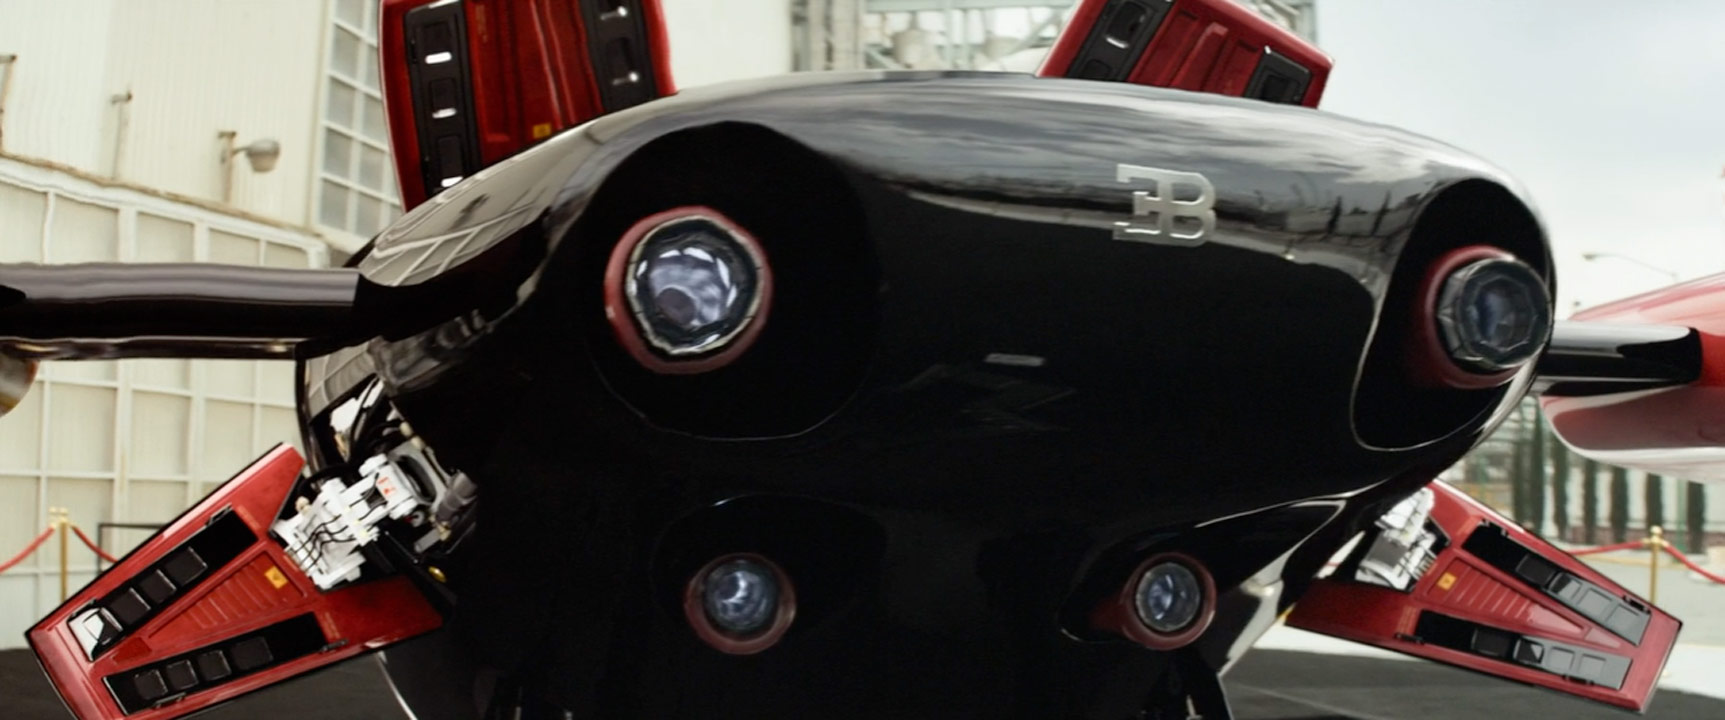 Supersonic-Bugatti-2.jpg